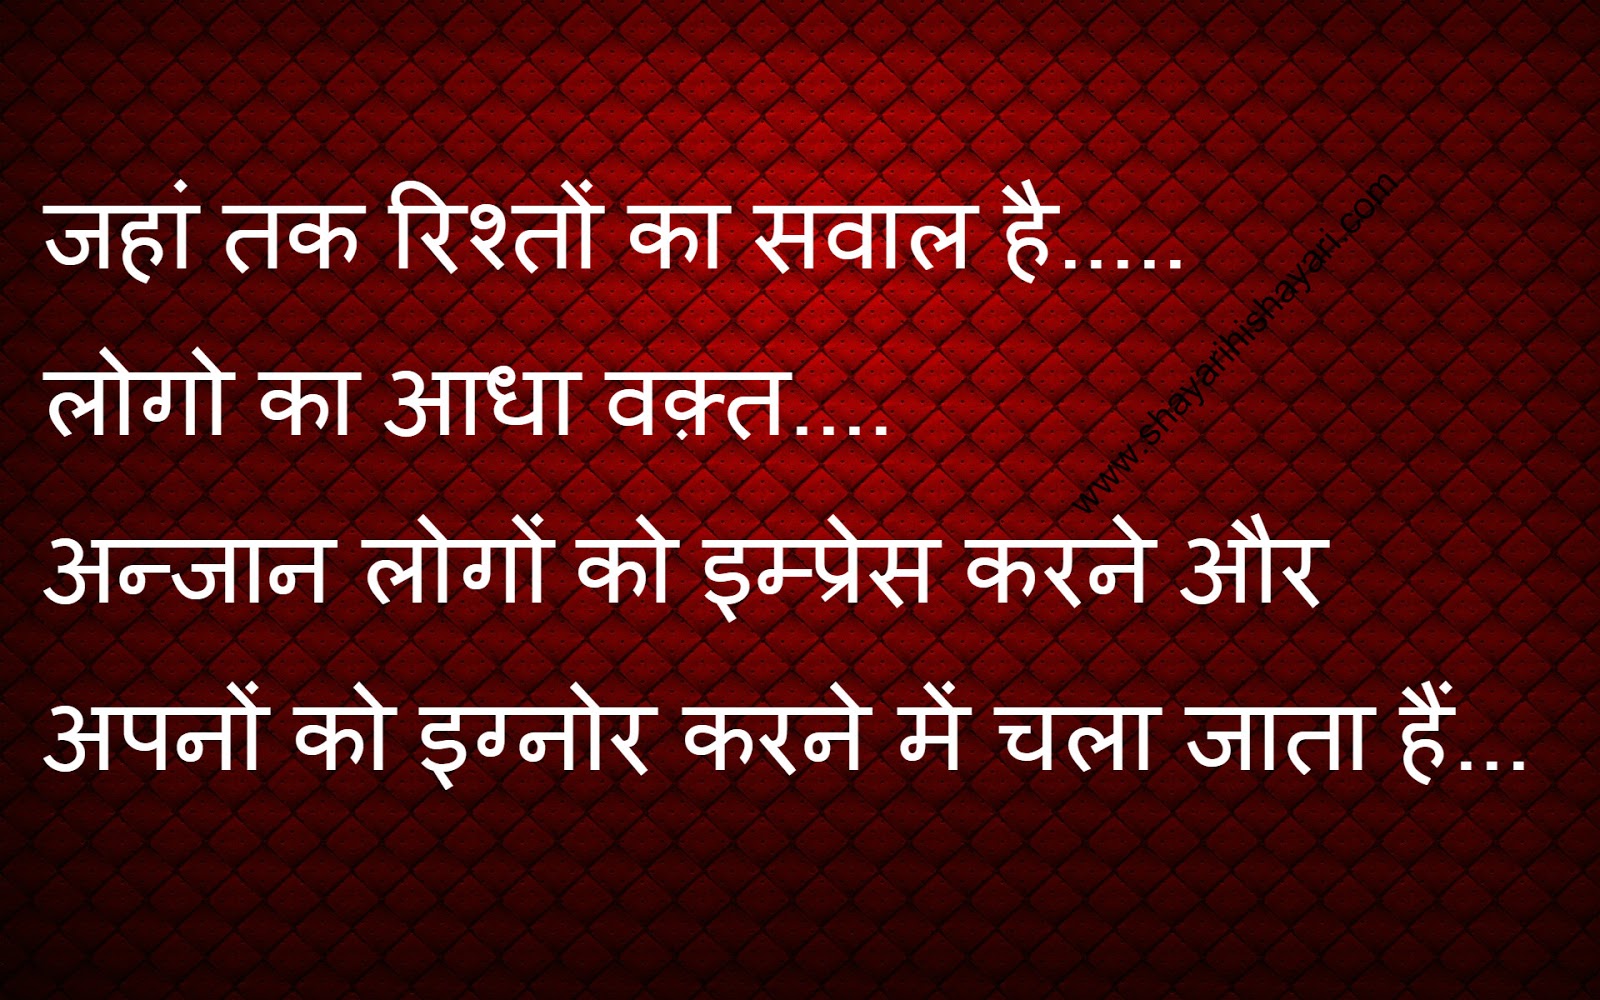 Sad Shayri Quotes Pics Sad love shayari in hindi for girlfriend with image